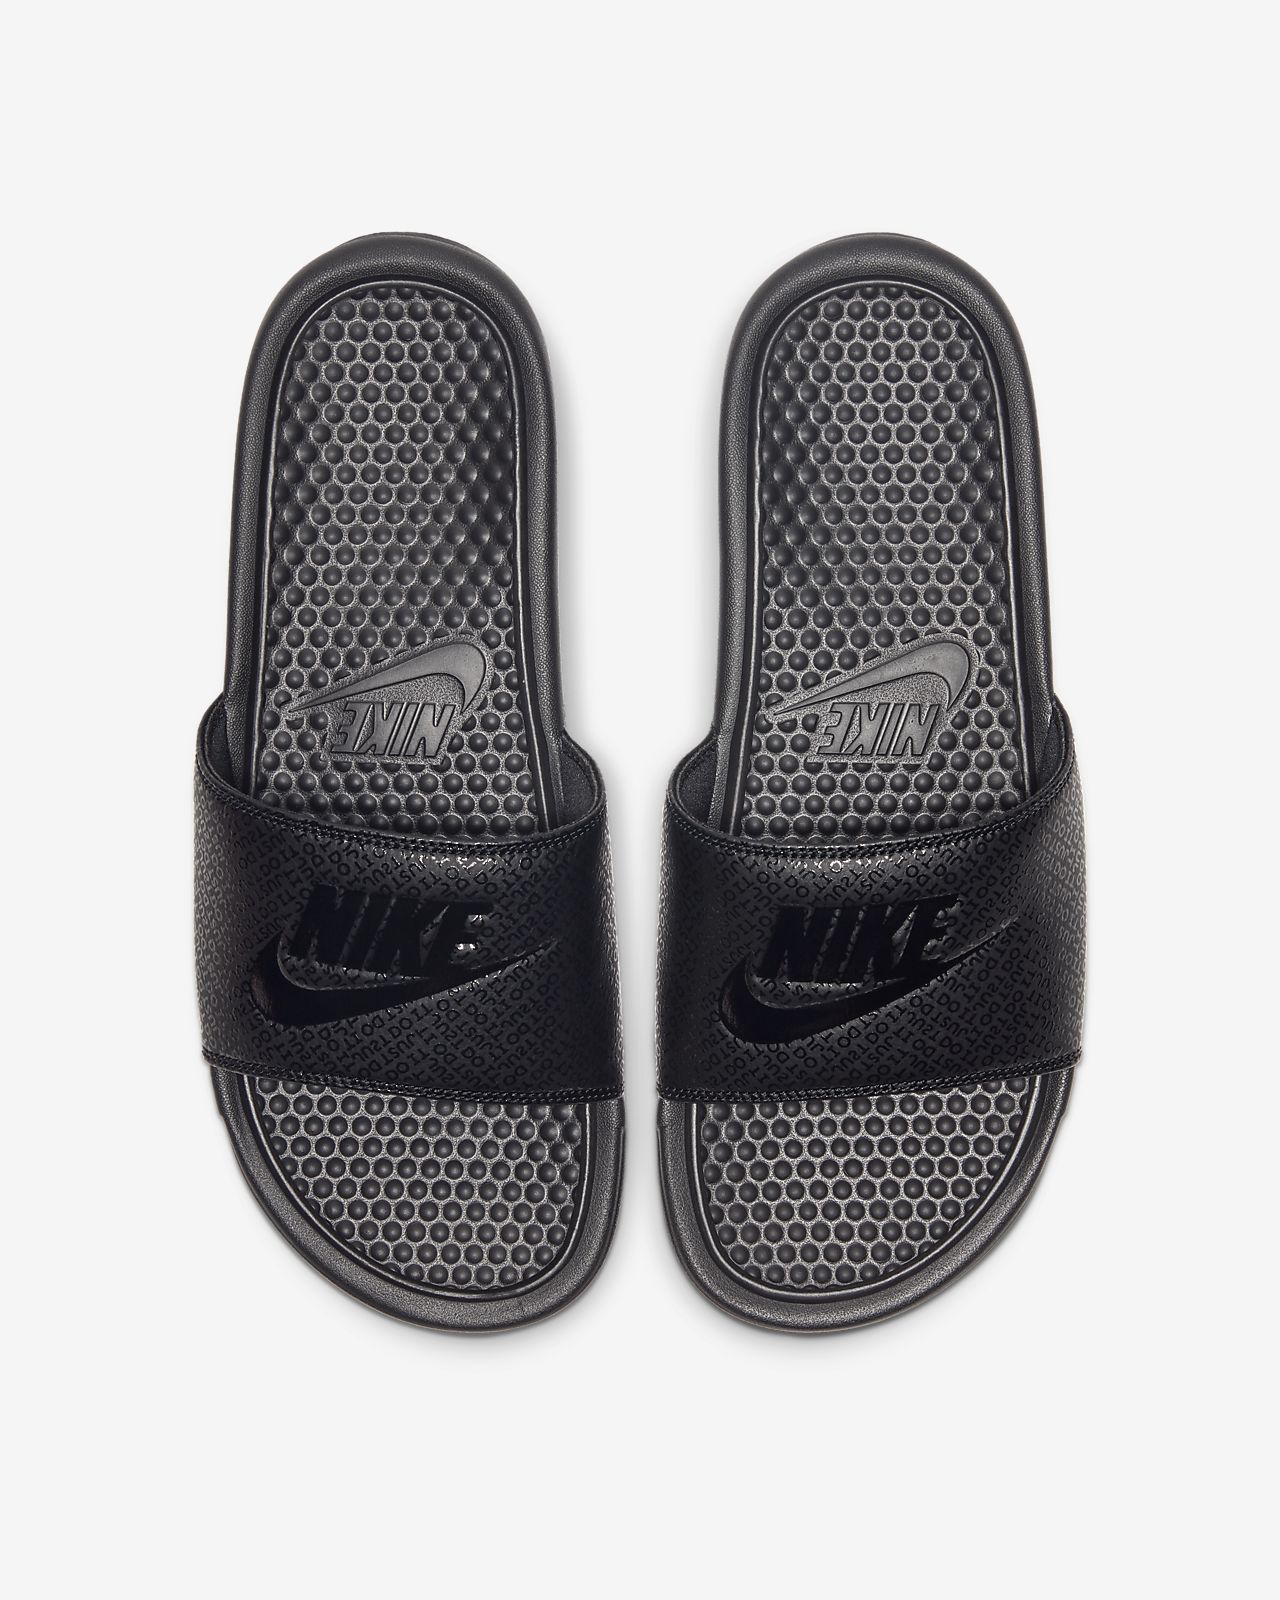 slippers under $5